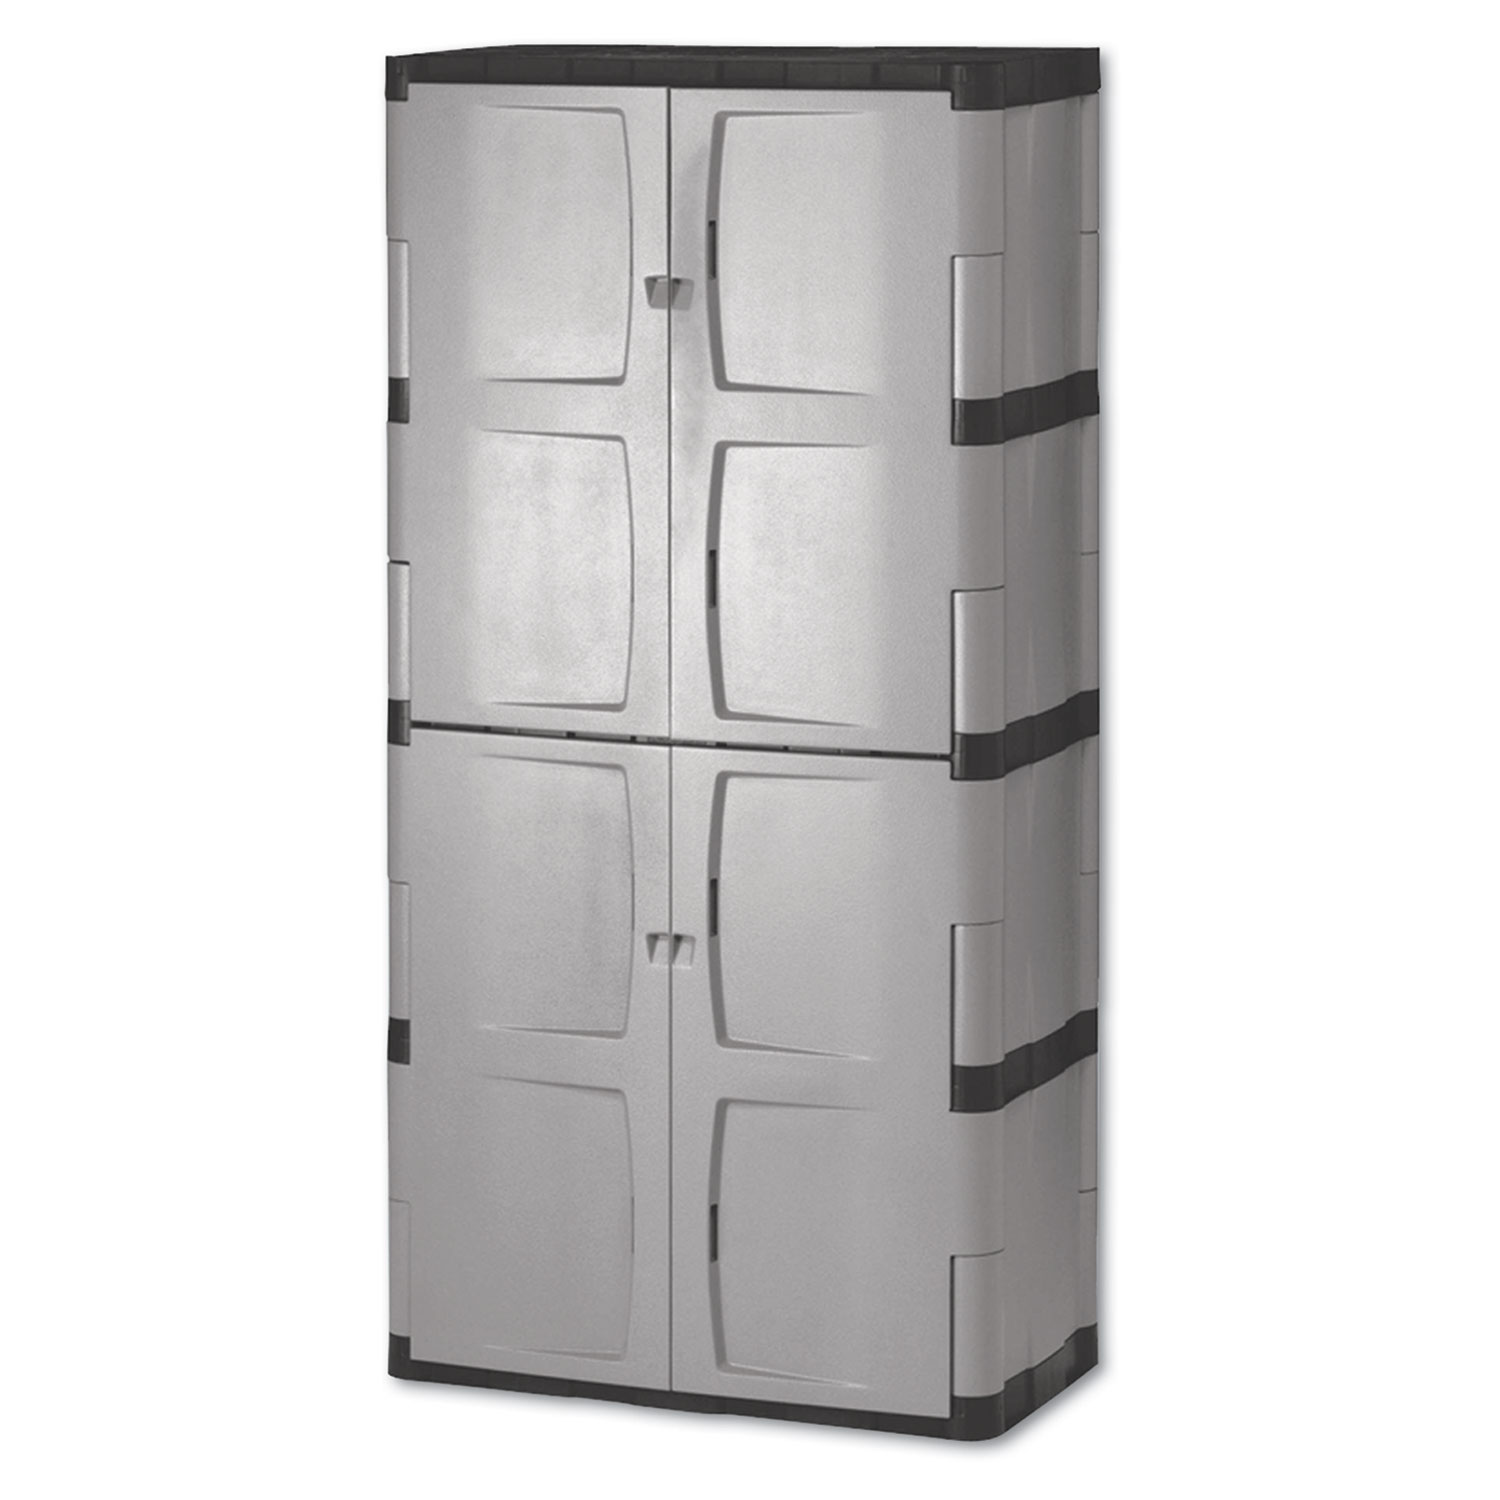  Rubbermaid FG708300MICHR Double-Door Storage Cabinet - Base/Top, 36w x 18d x 72h, Gray/Black (RUB7083) 